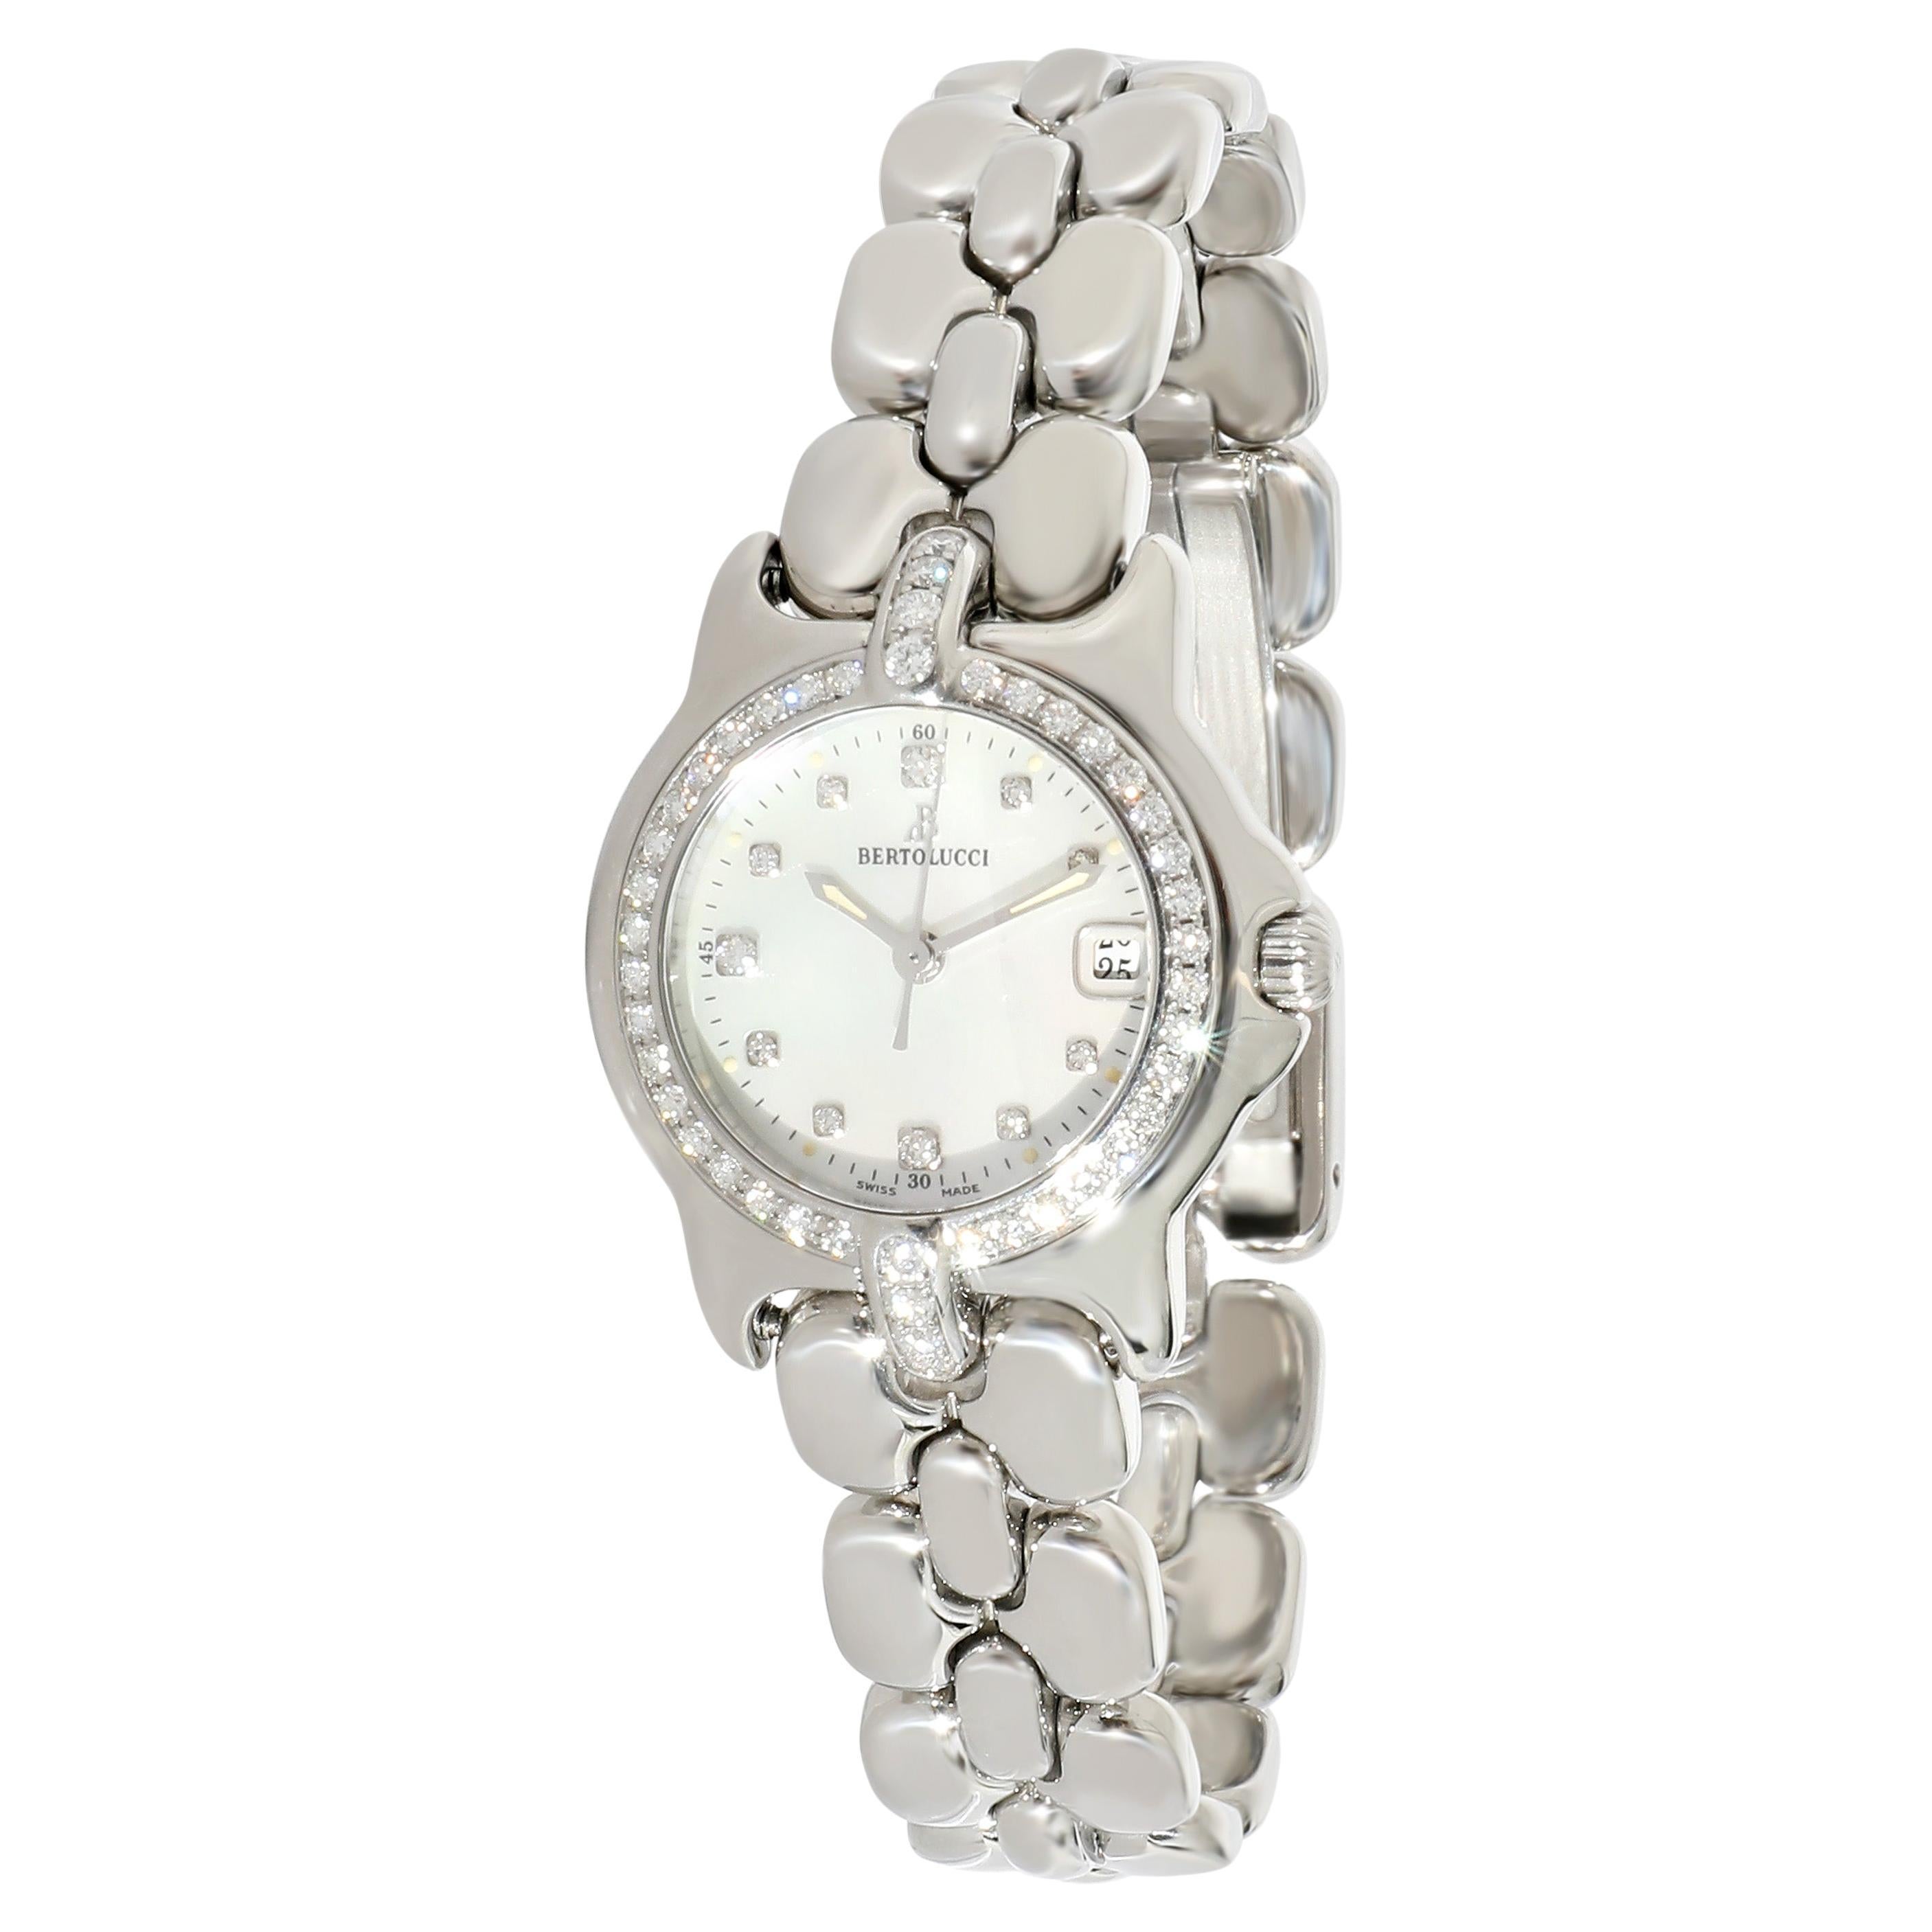 Bertolucci Pulchra 083 41 A Women's Watch in  Stainless Steel For Sale